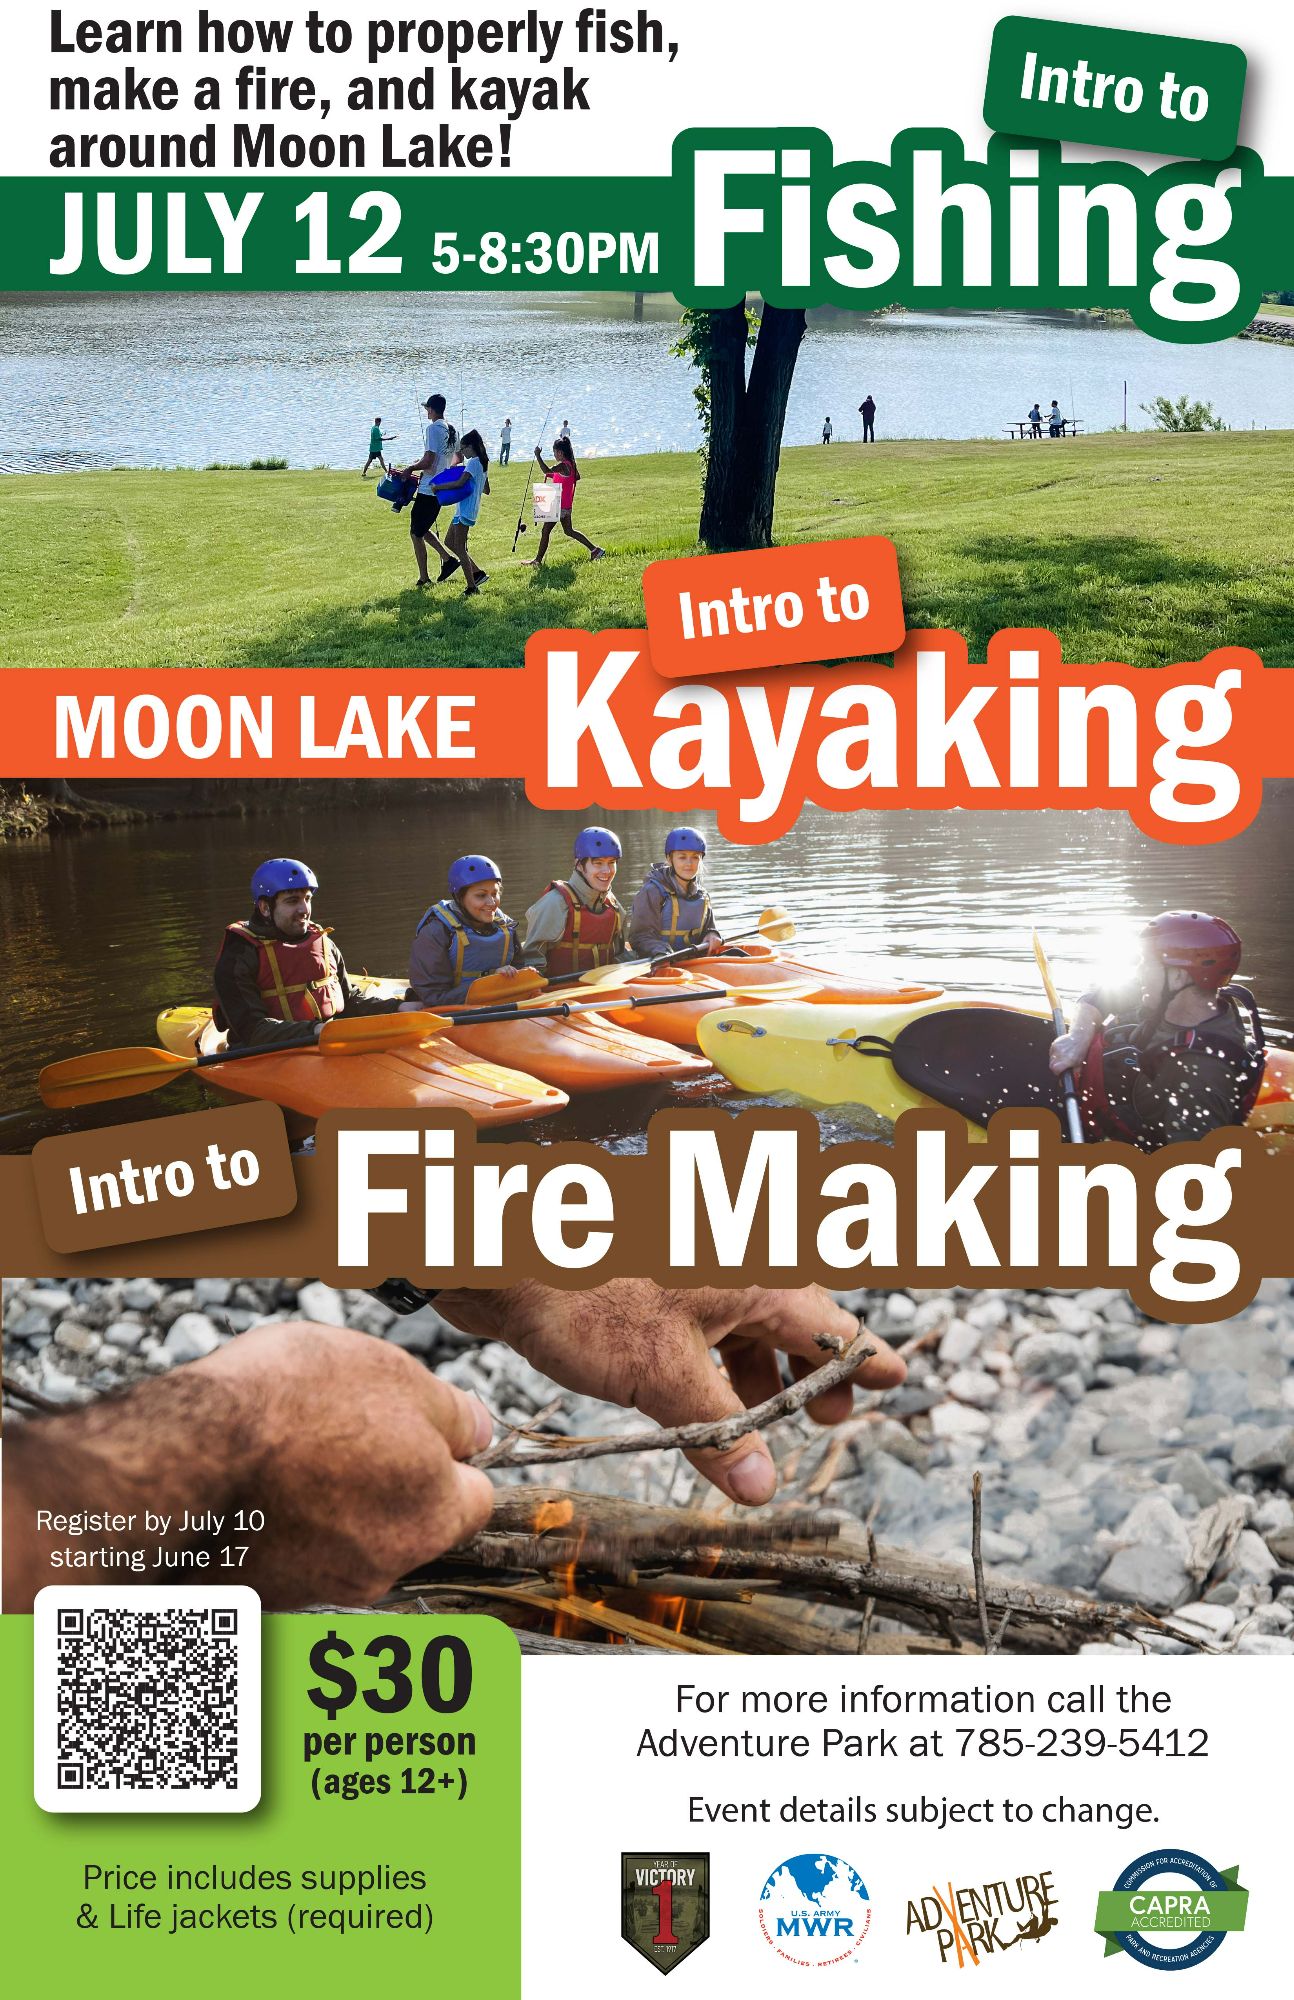 Fish, Kayak, Fire2.jpg